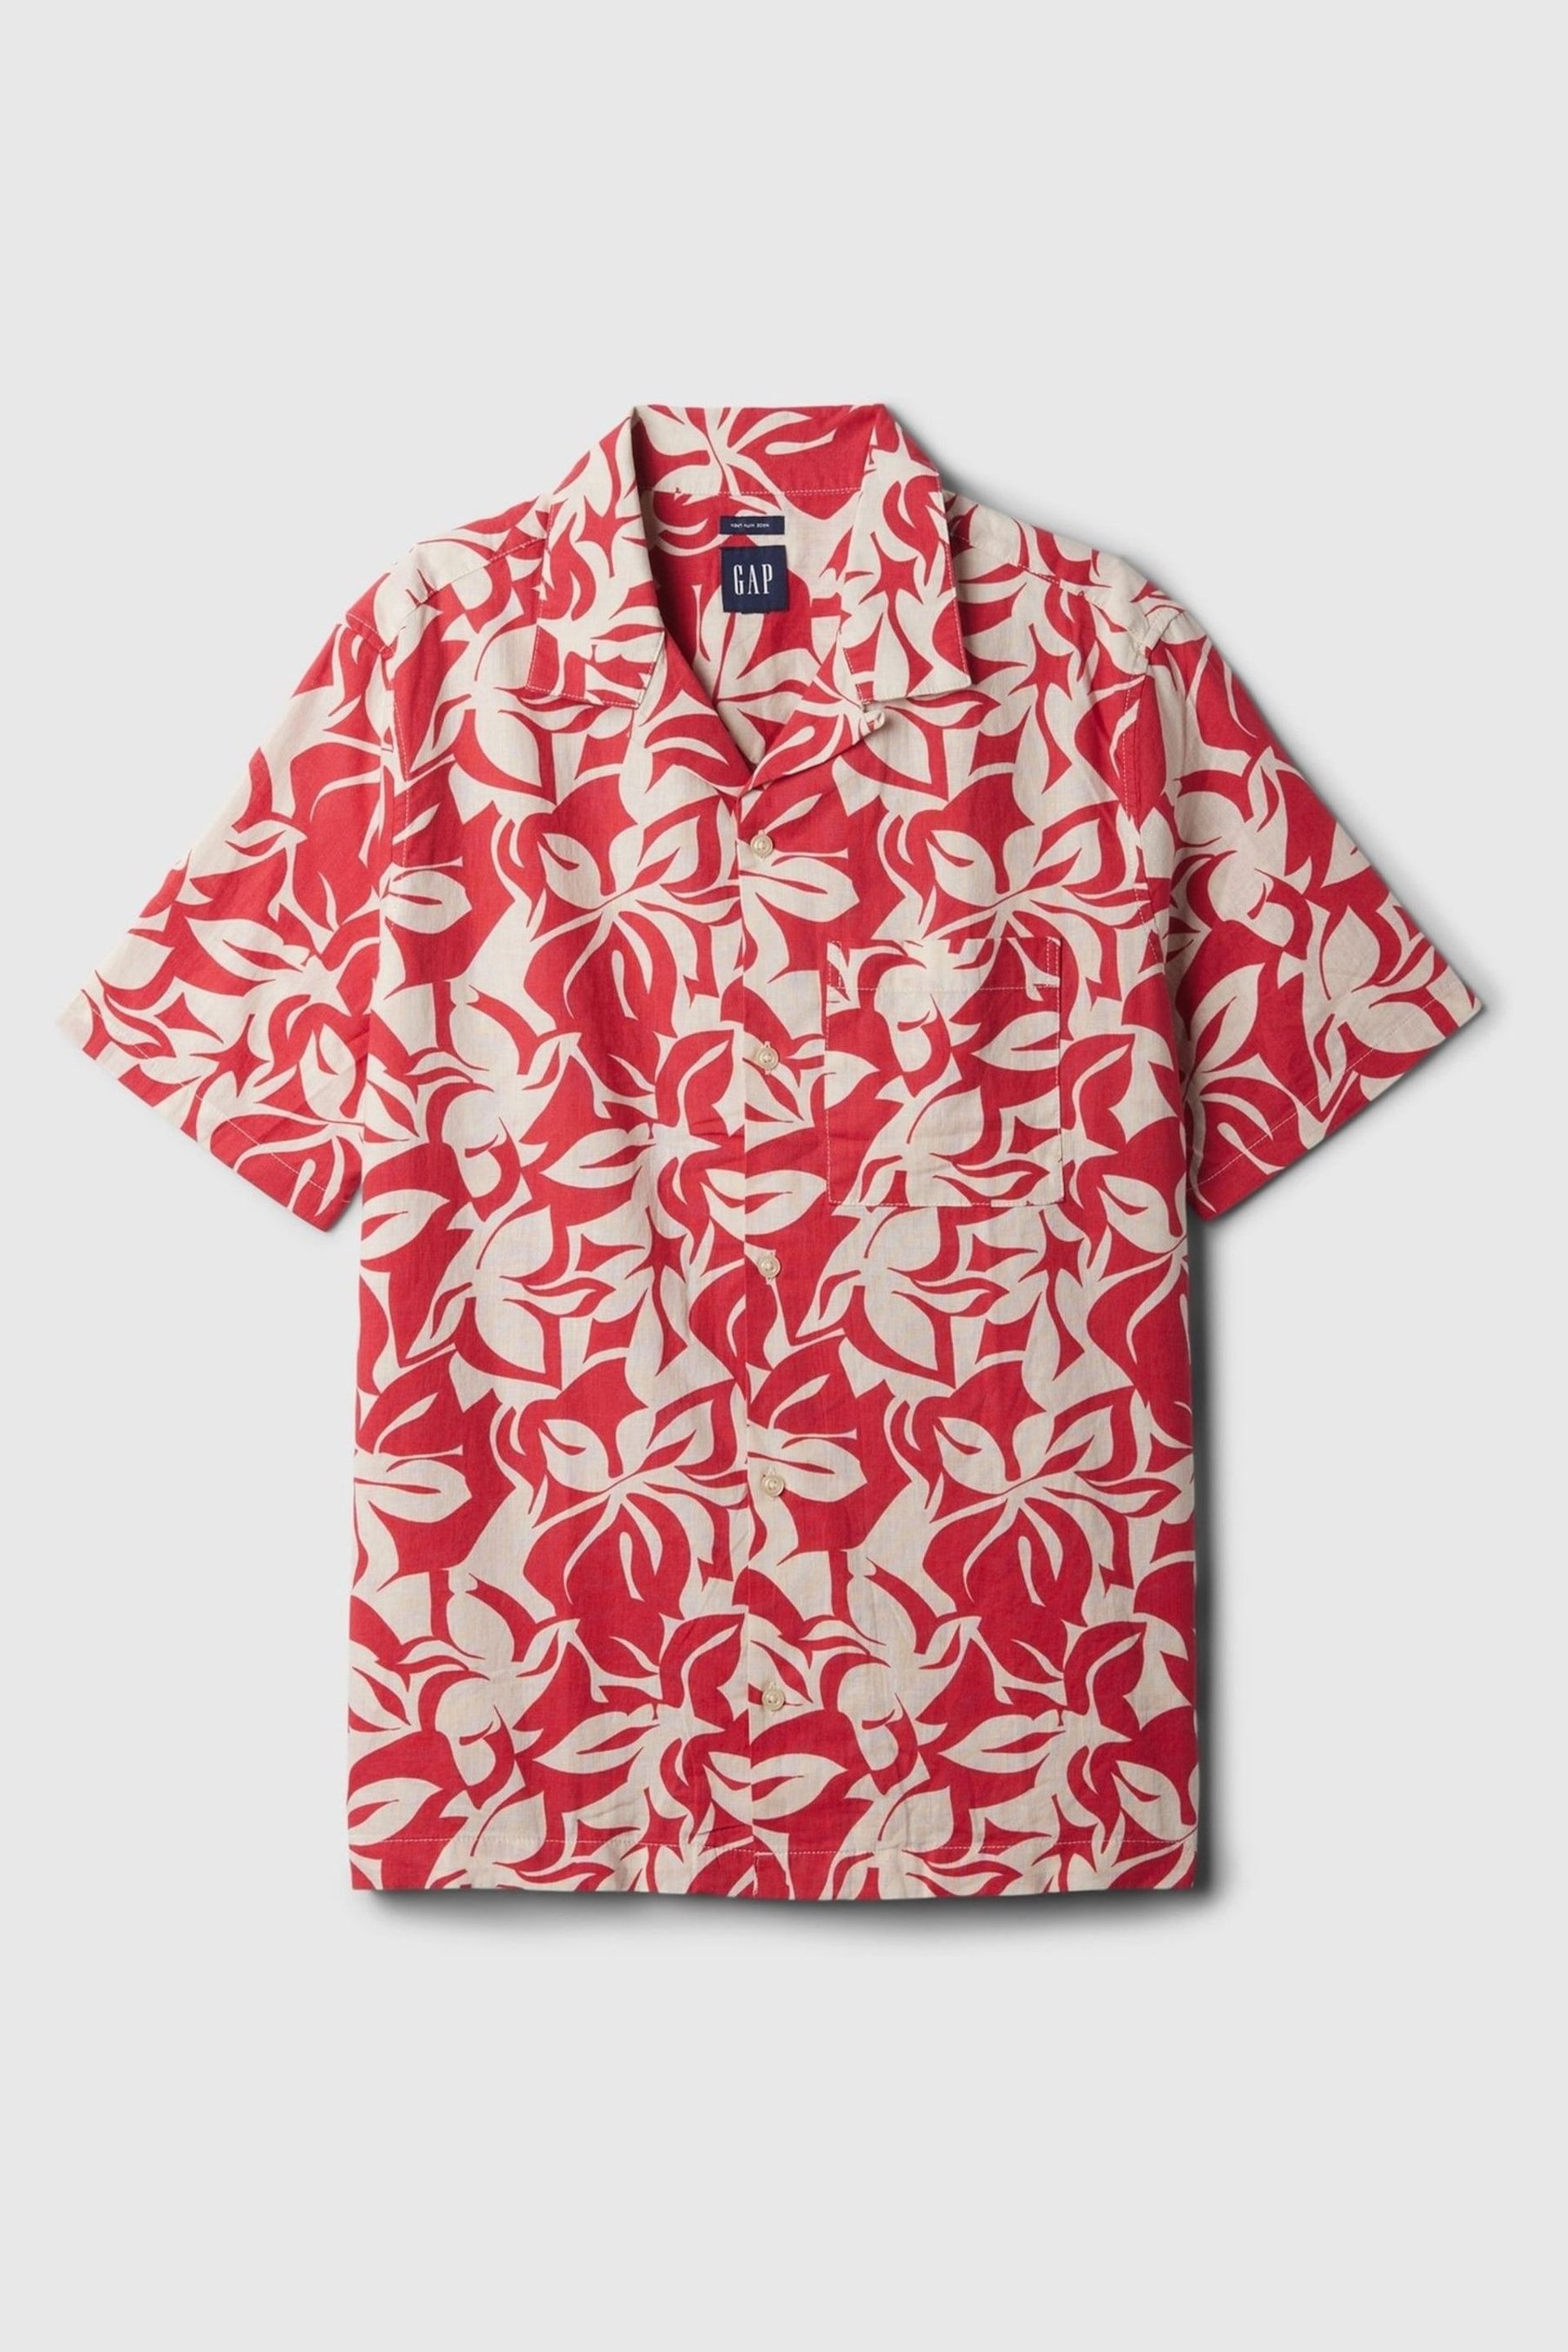 Gap Red Floral Linen Cotton Short Sleeve Shirt - Image 4 of 4